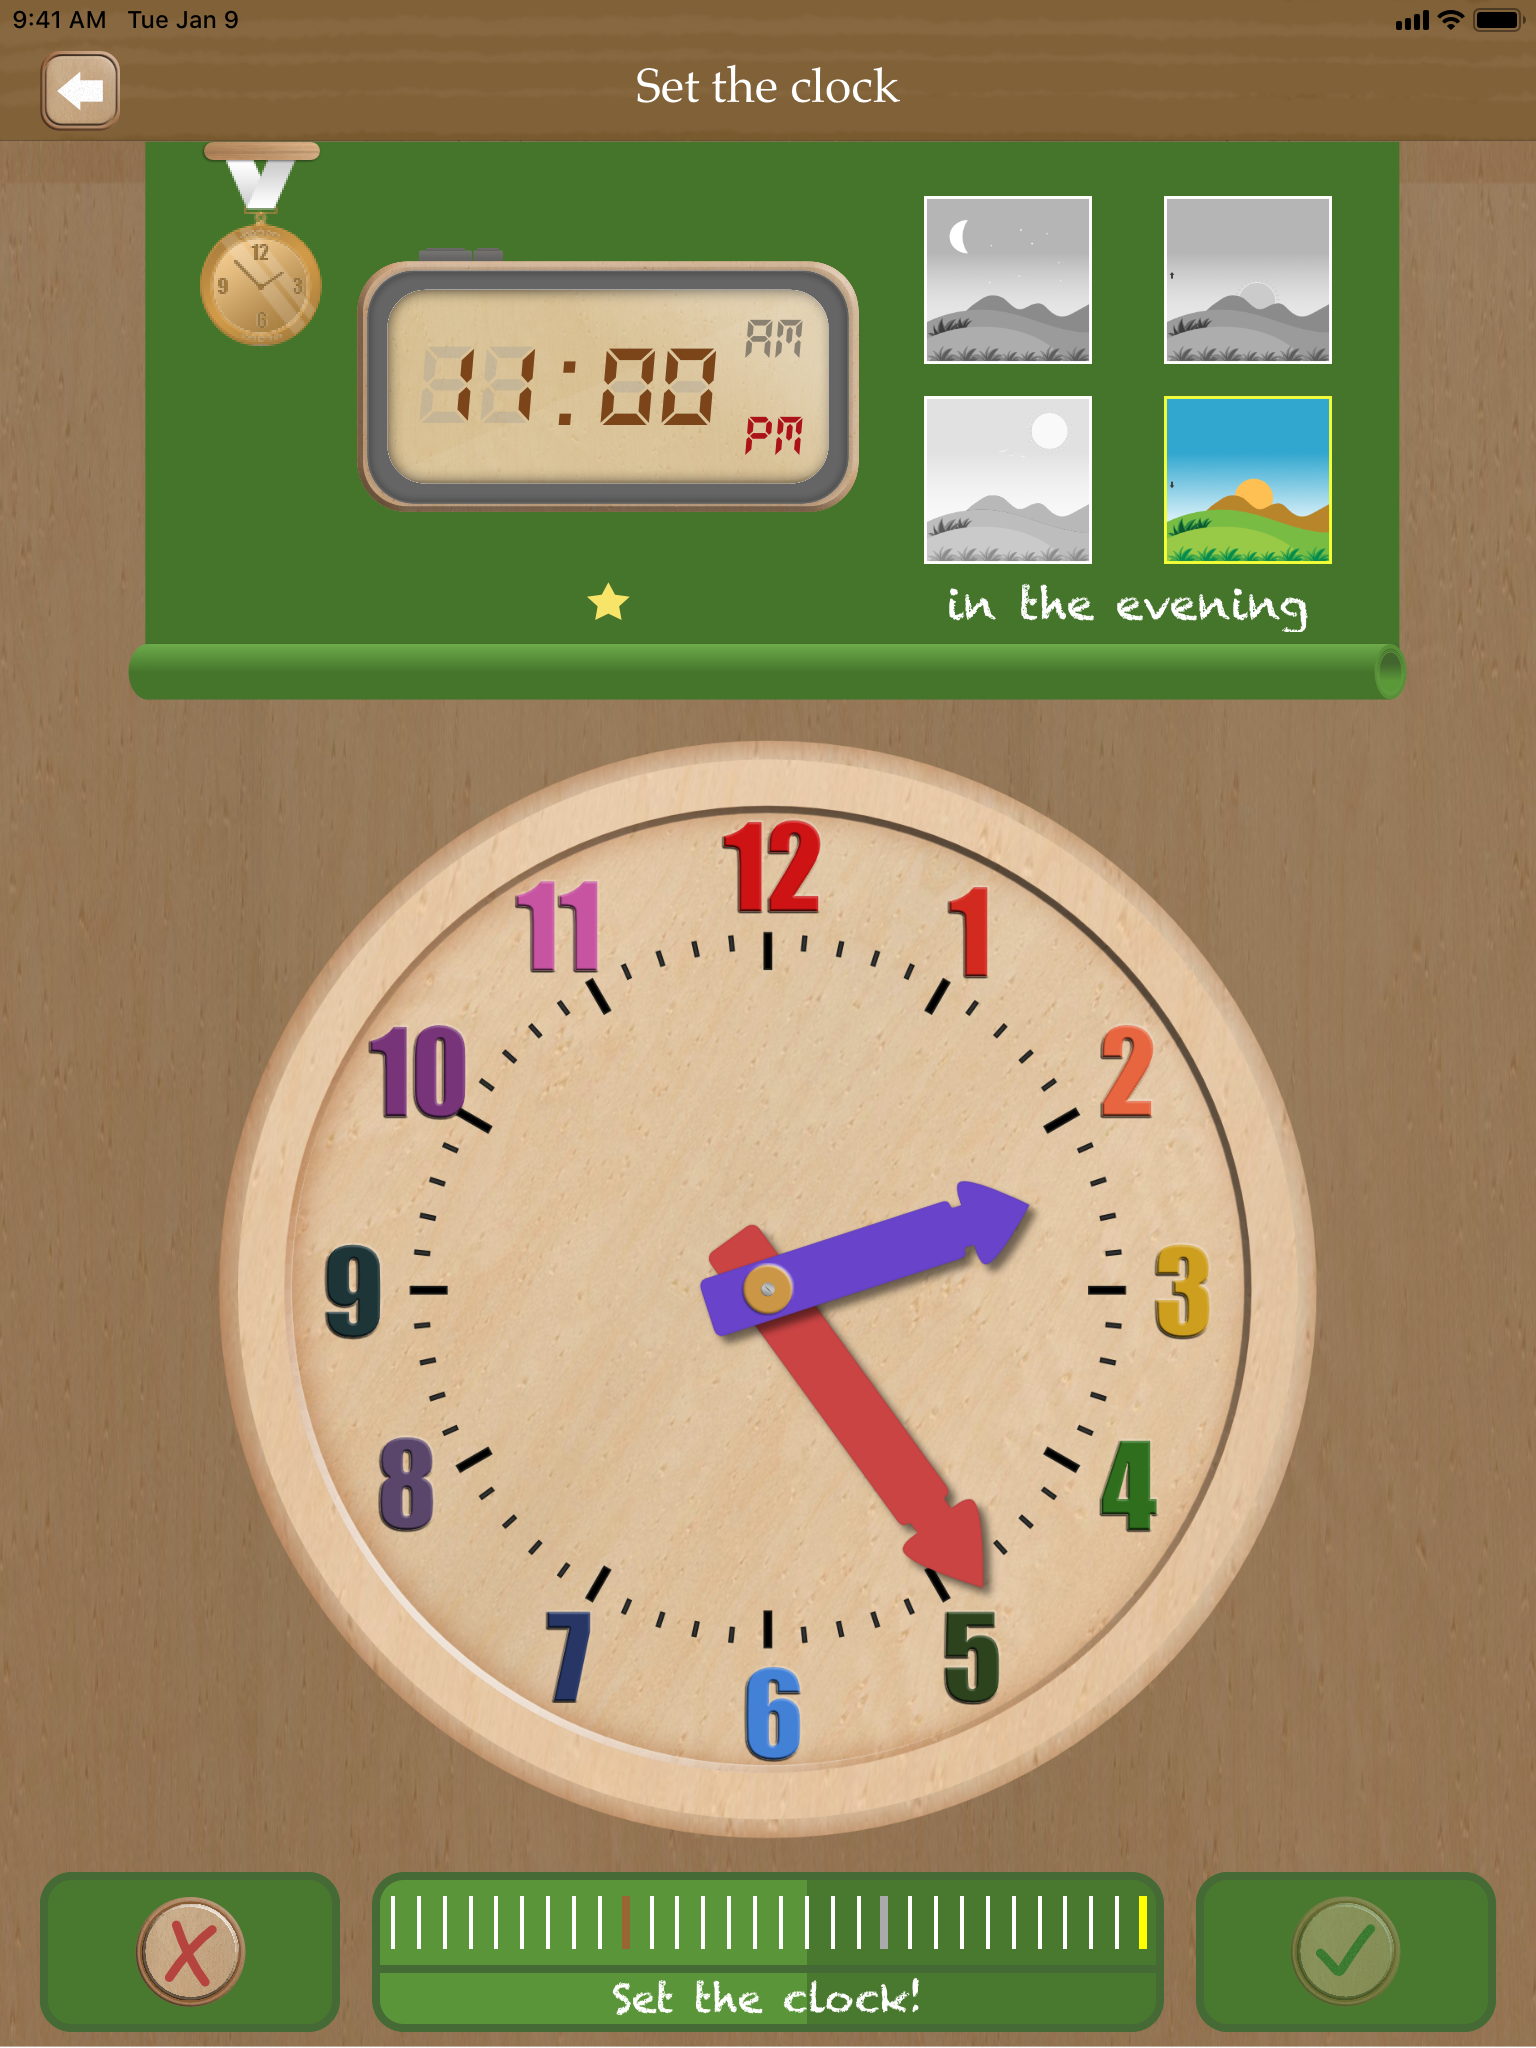 Thumbnail: Set the clock - telling time on iPad App - game type 'Set the clock forward and backward'